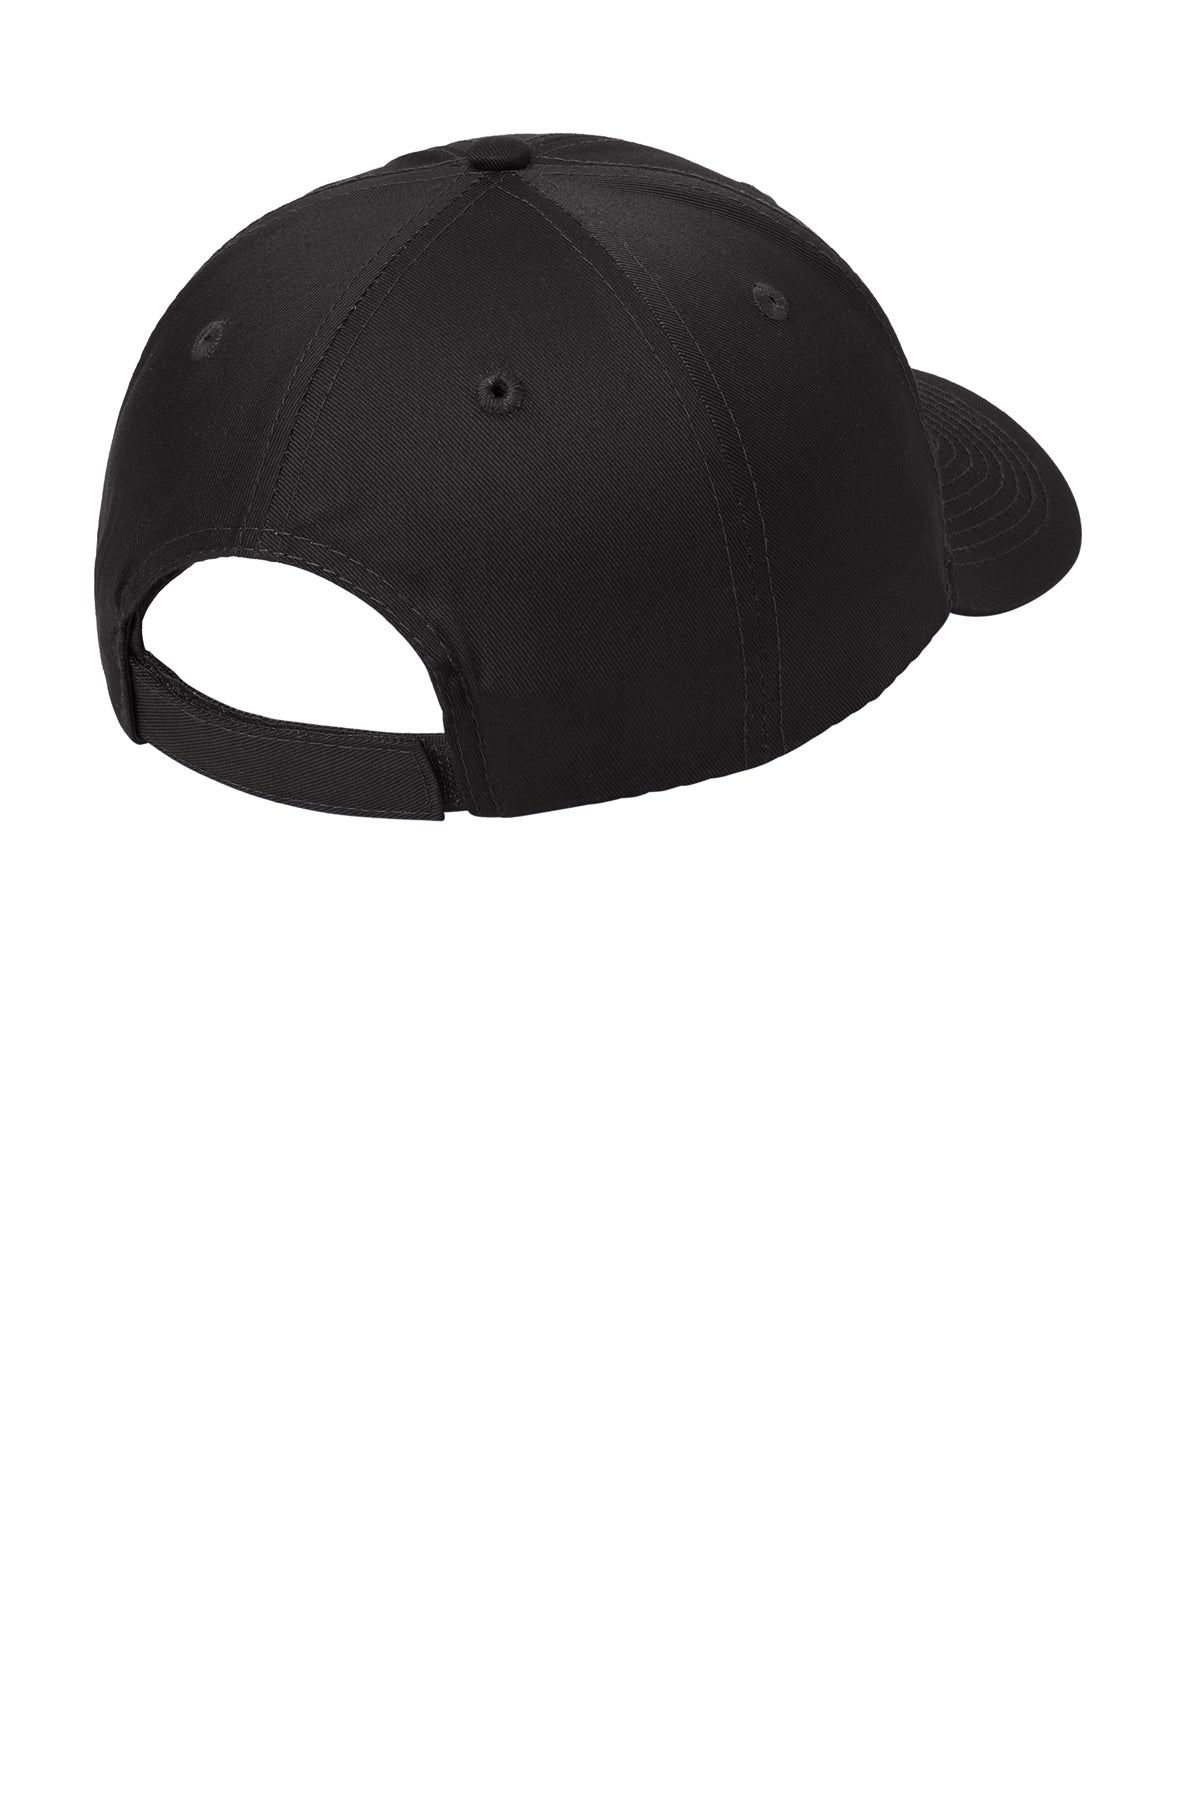 Port Authority Uniforming Branded Twill Caps, Black